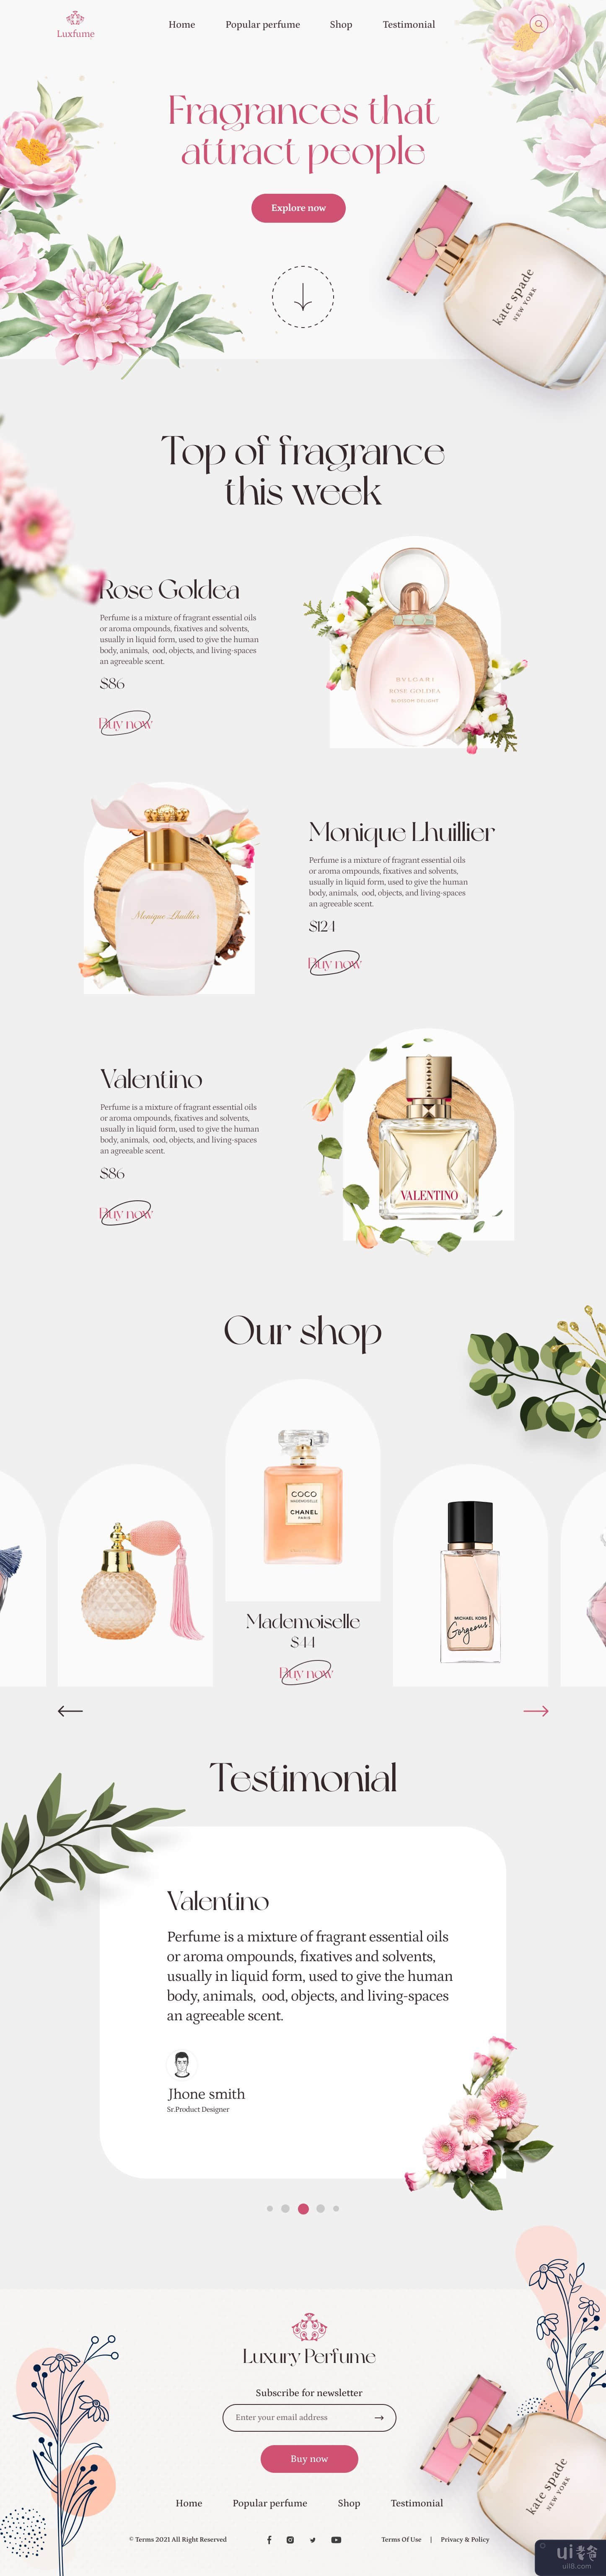 香水电子商务登陆页面设计(Perfume Ecommerce Landing Page Design)插图1